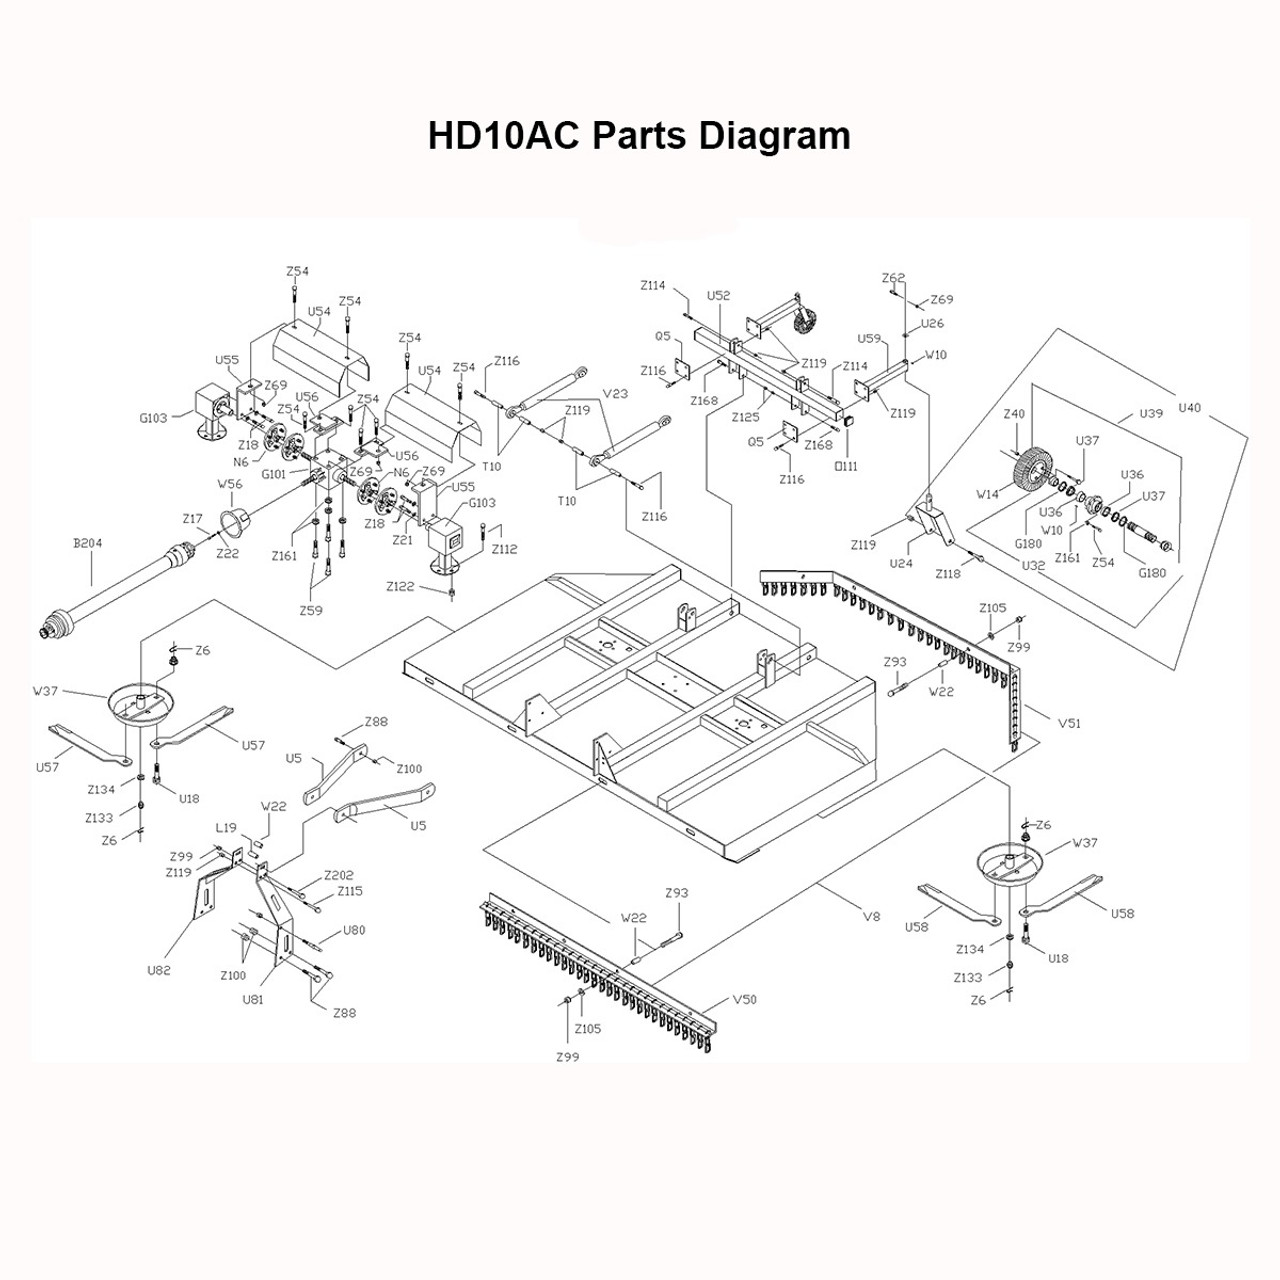 HD10AC Parts Diagram